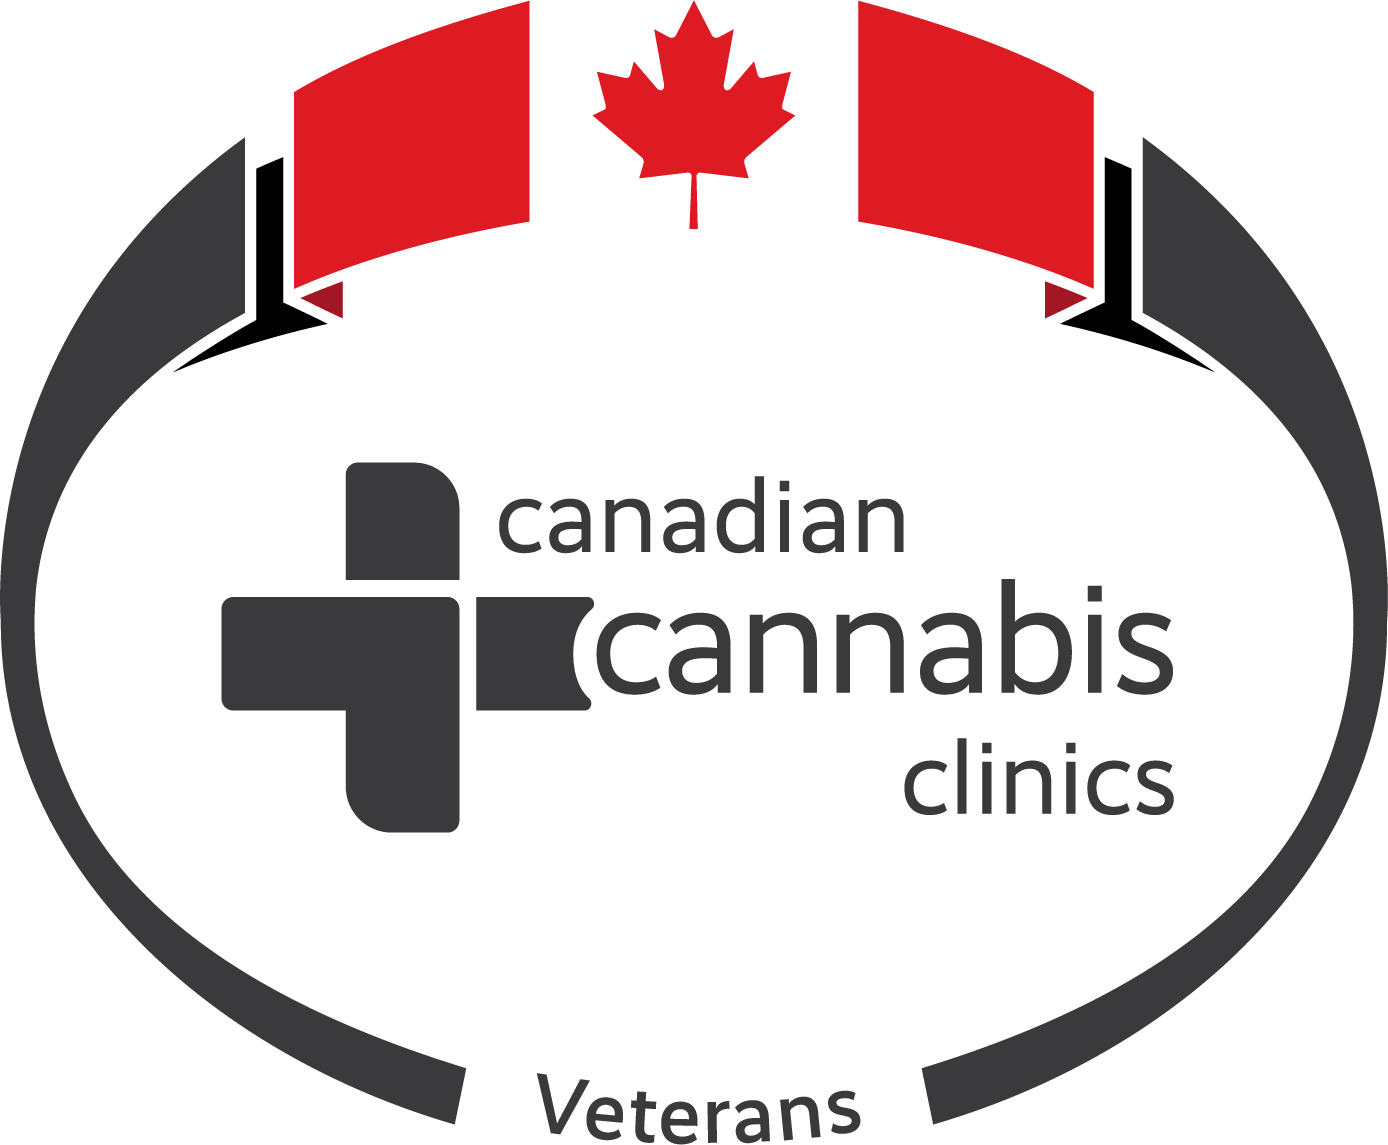 Canadian Cannabis Clinics Veterans Logo